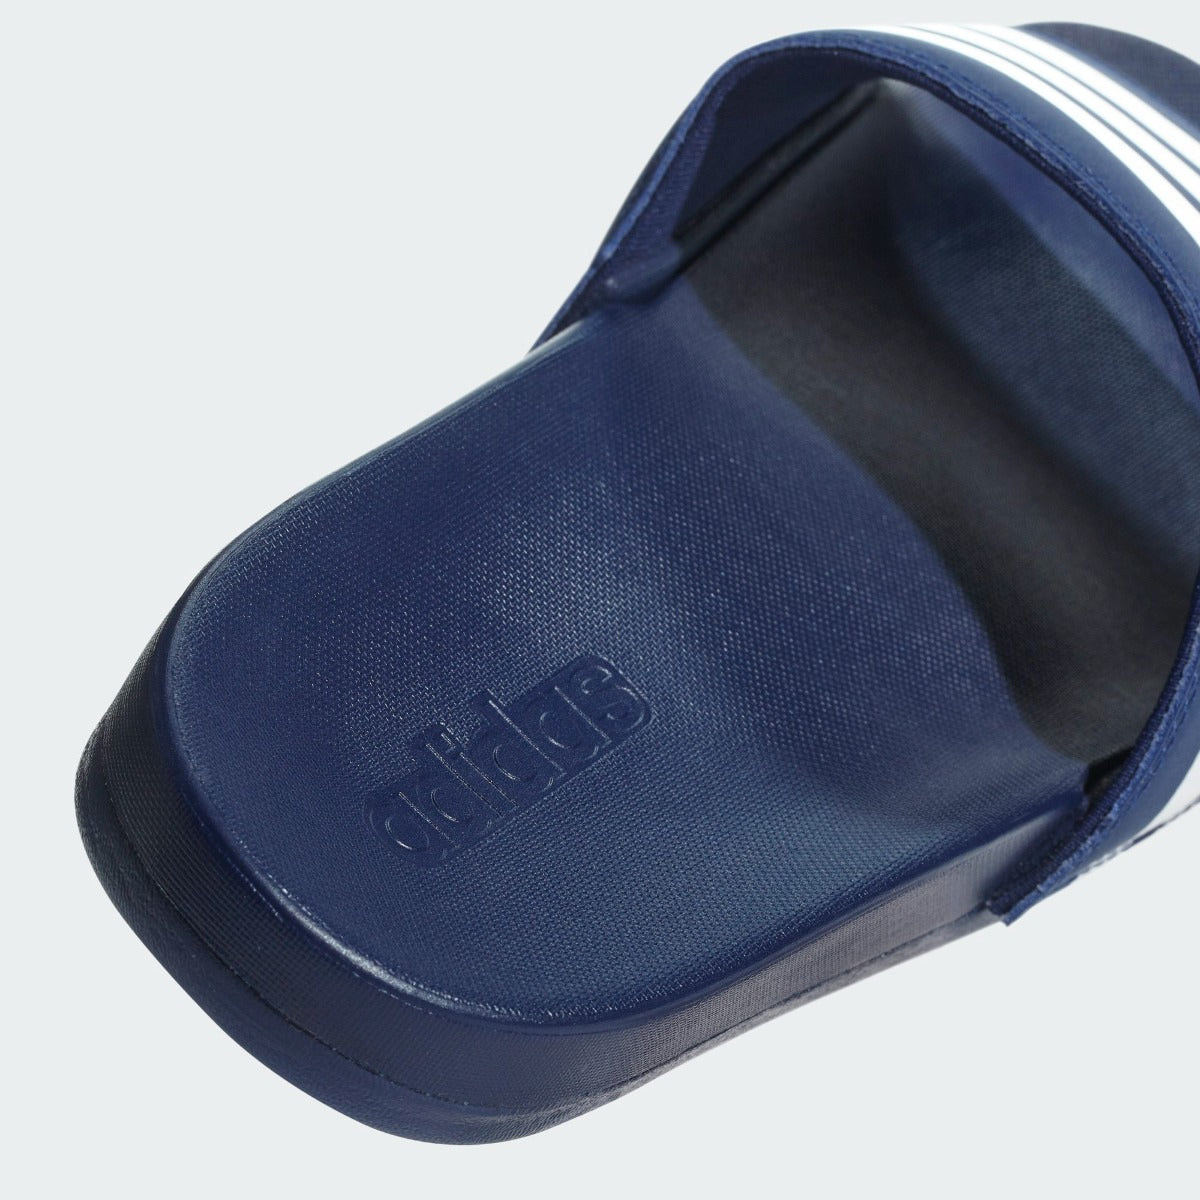 Adidas Adilette Comfort Sandal - Navy (Detail 3)